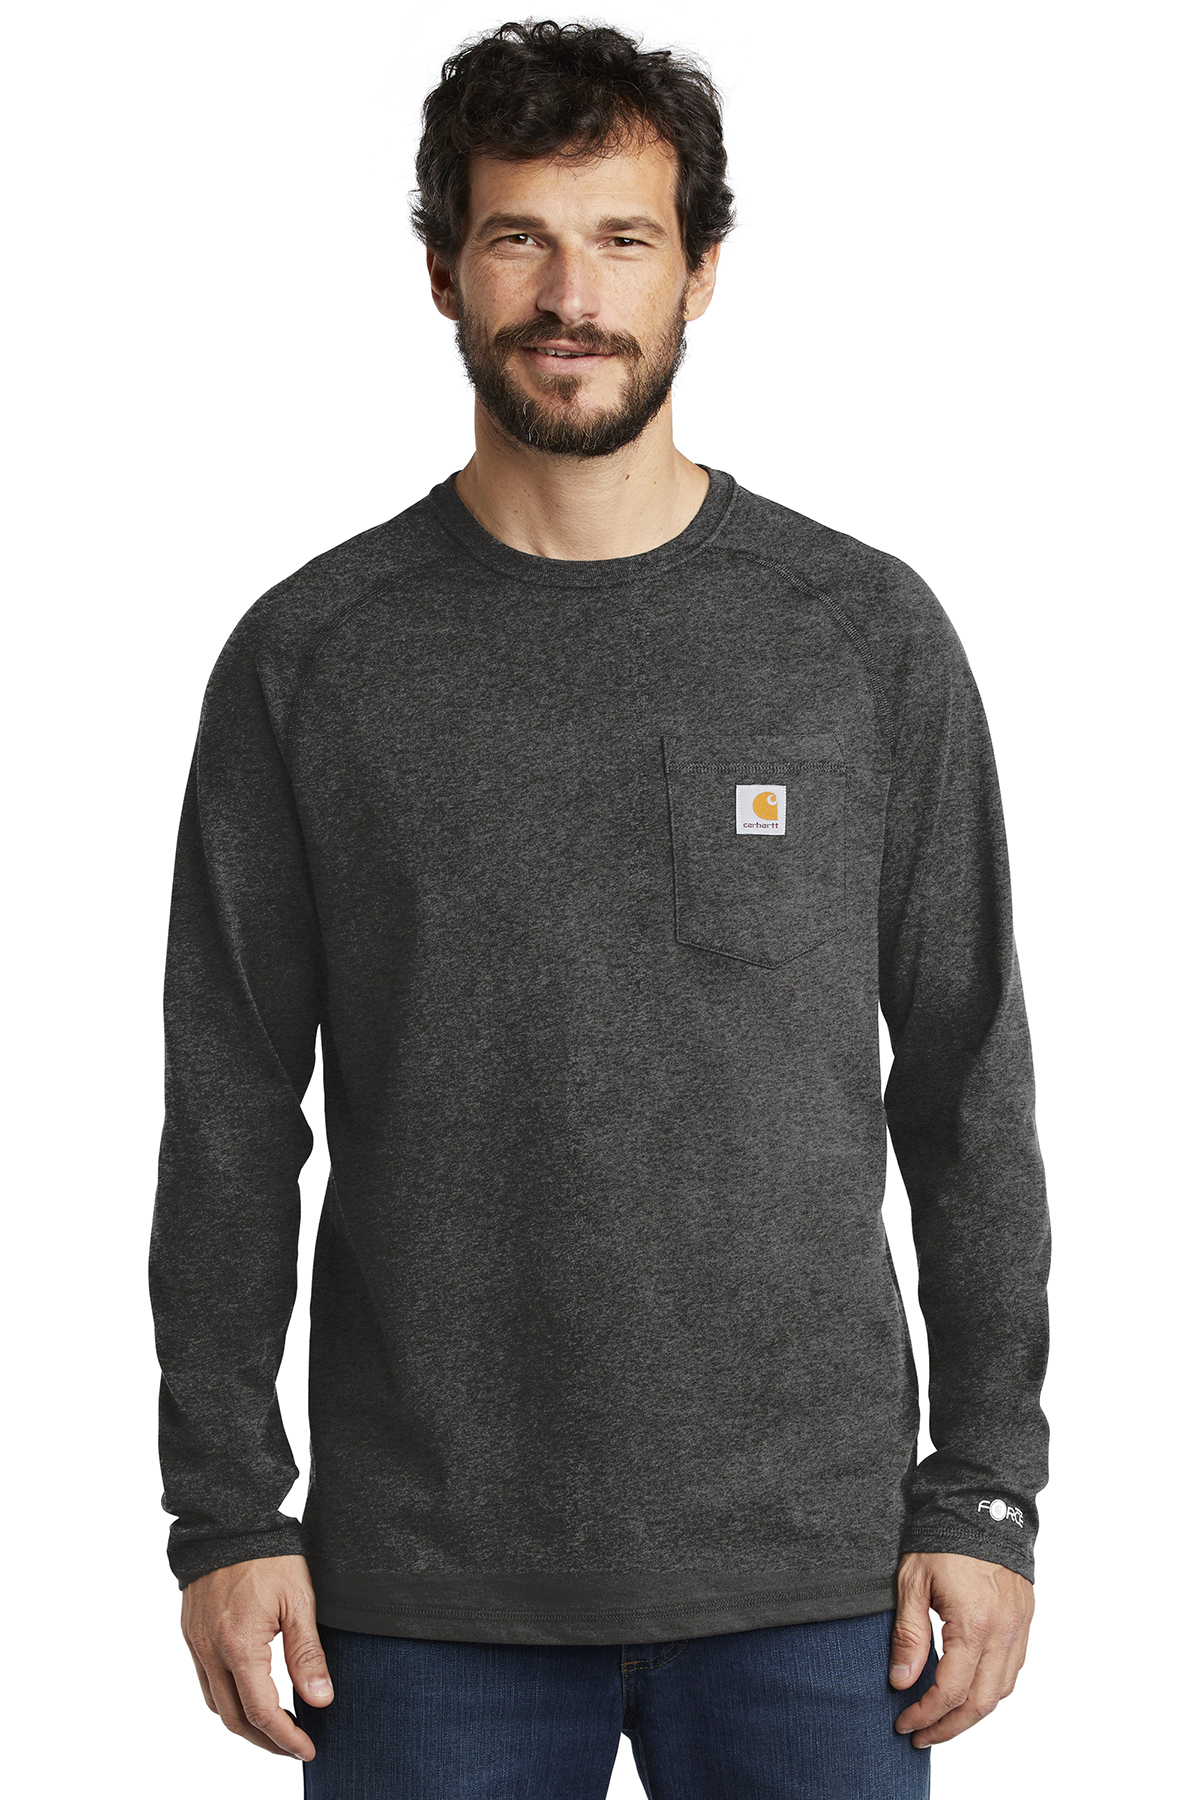 Carhartt Force Cotton Delmont Long Sleeve T-Shirt | Product | SanMar